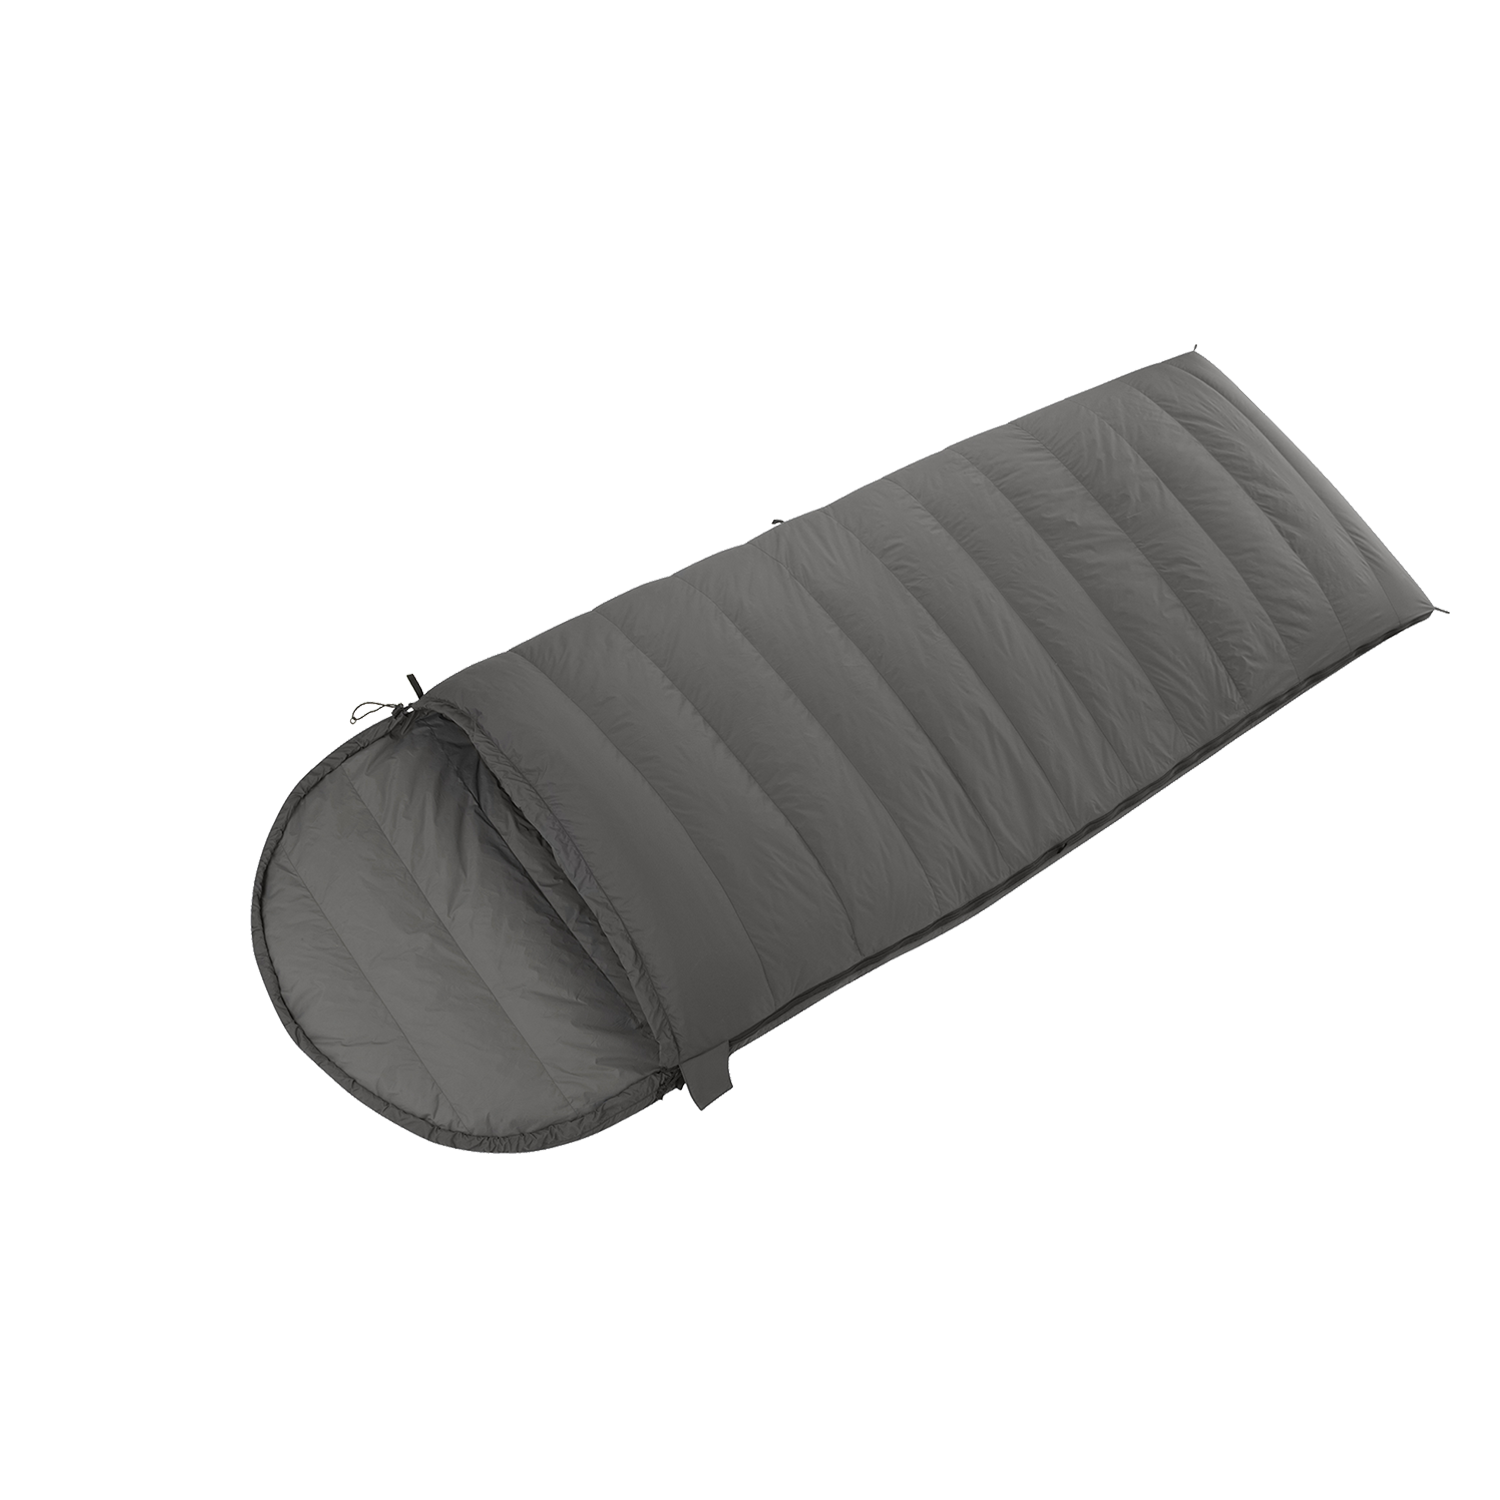 Спальный мешок BASK, размер 22х55, цвет черный 3541-80915-R Blanket pro v2 xl - фото 3